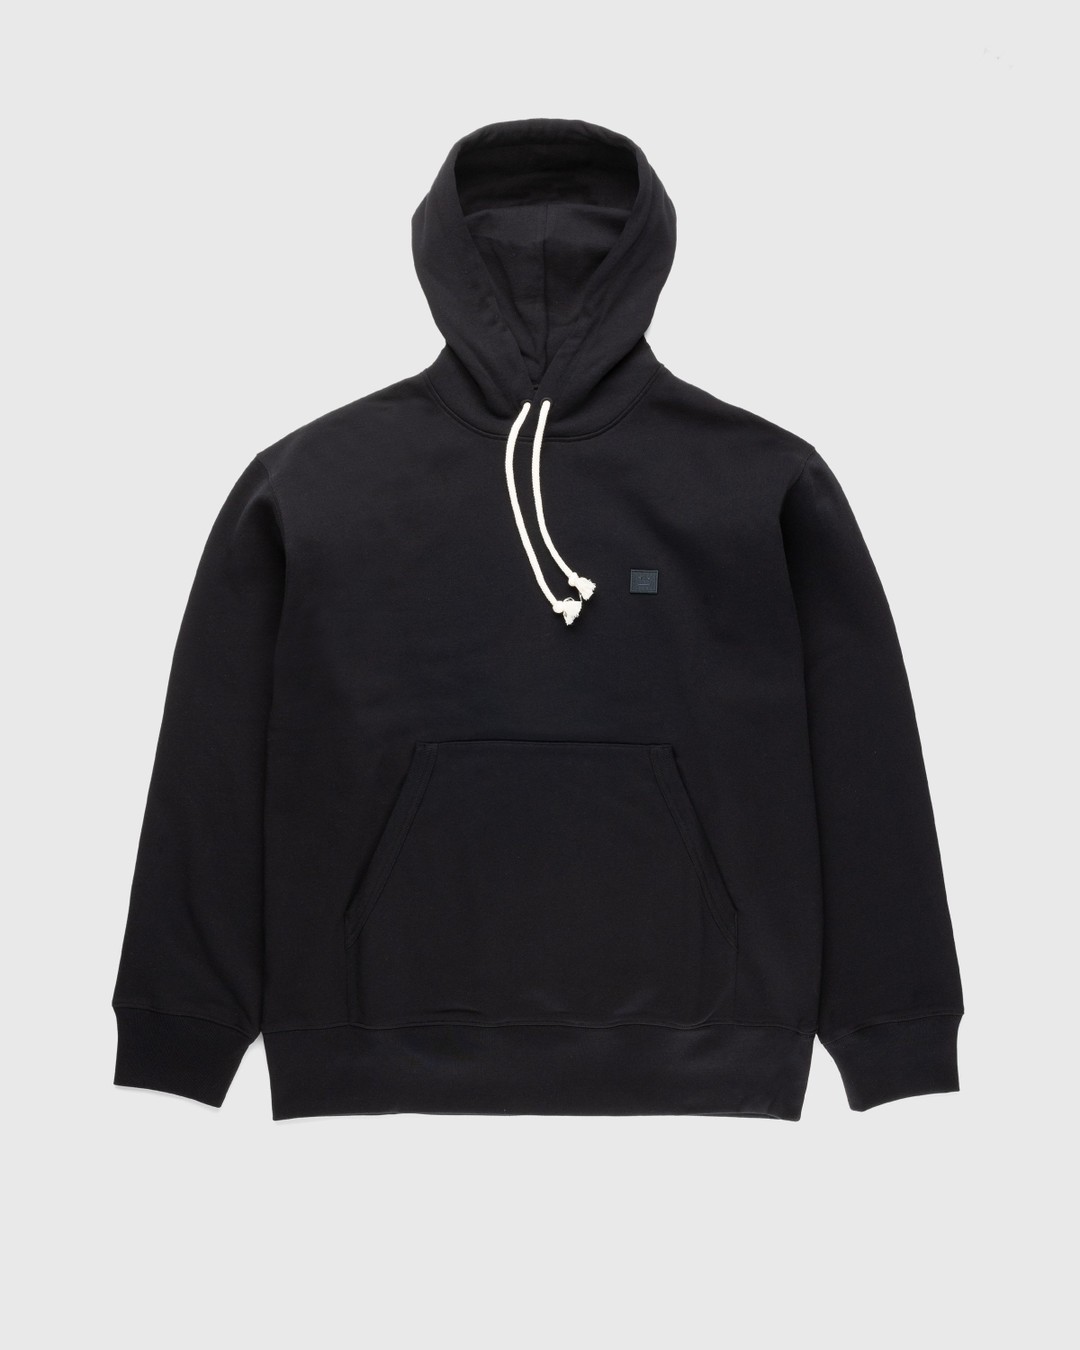 Acne Studios – Organic Cotton Hooded Sweatshirt Black - Sweats - Black - Image 1